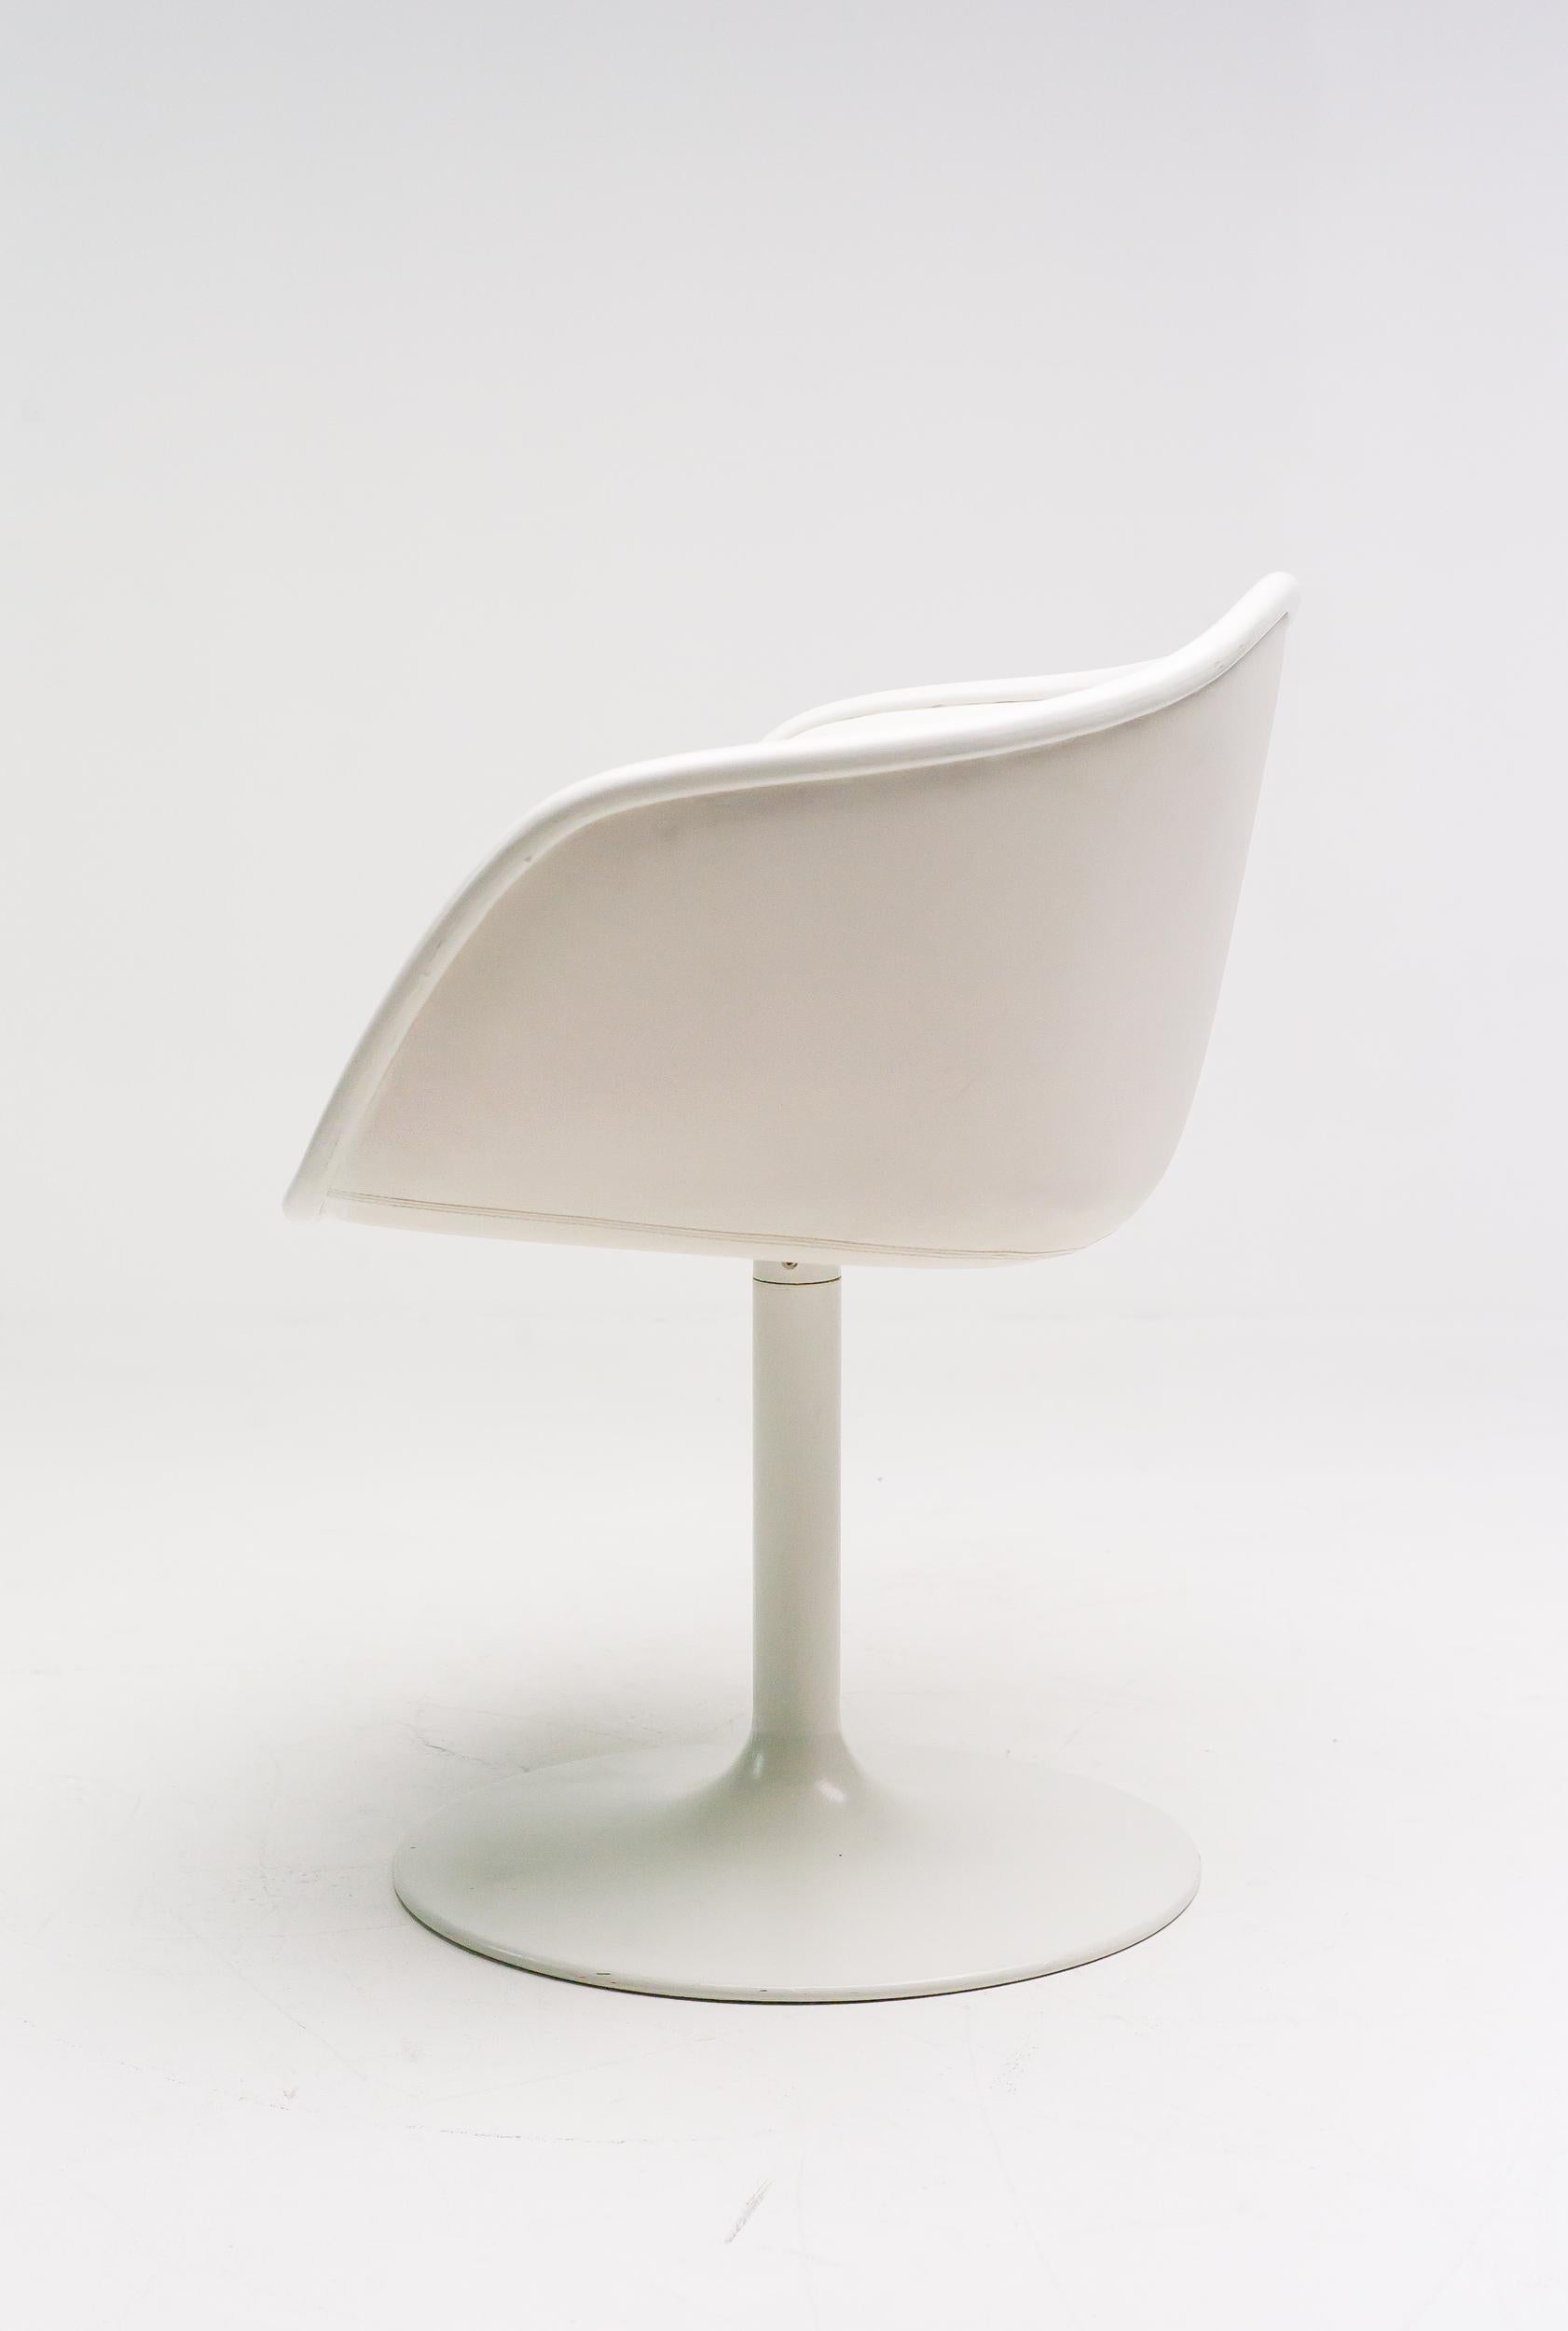 Pierre Paulin swivel chair model 7800, designed circa 1970 for Artifort, Netherlands.
Very rare Paulin model with original Naugahyde upholstery.


 